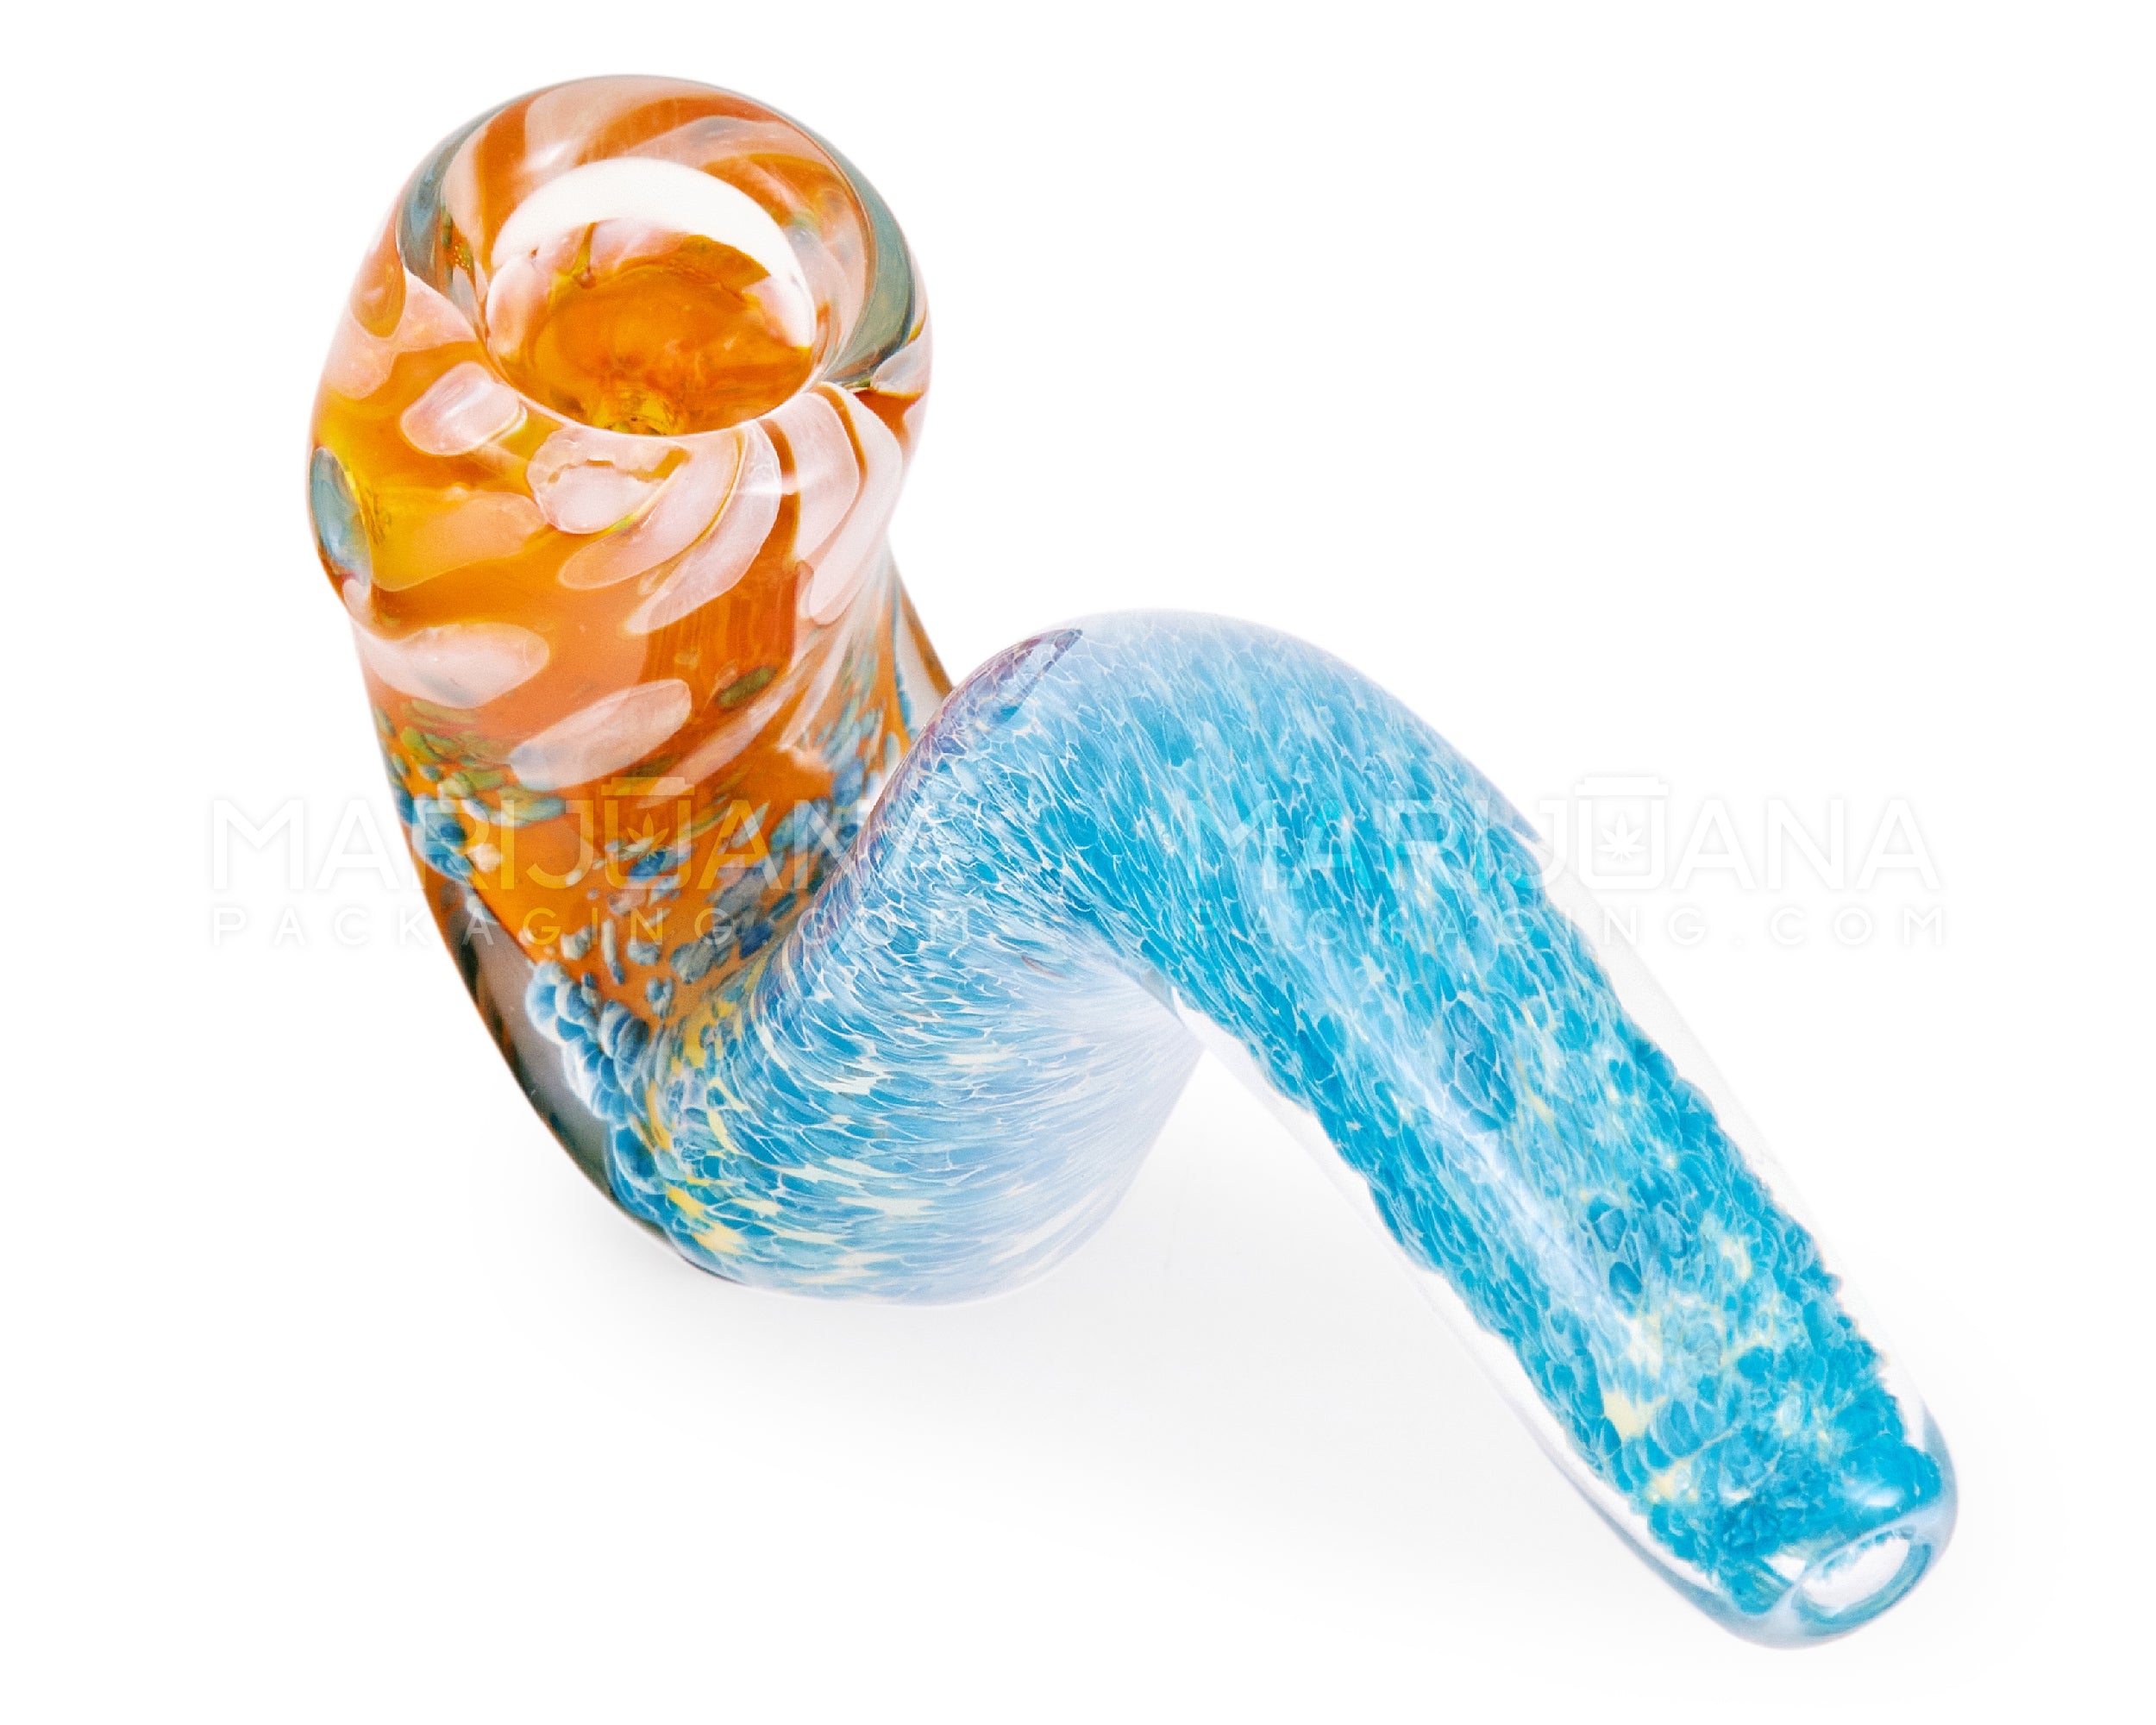 Frit & Fumed Sherlock Hand Pipe w/ Speckles | 5.5in Long - Glass - Assorted - 2